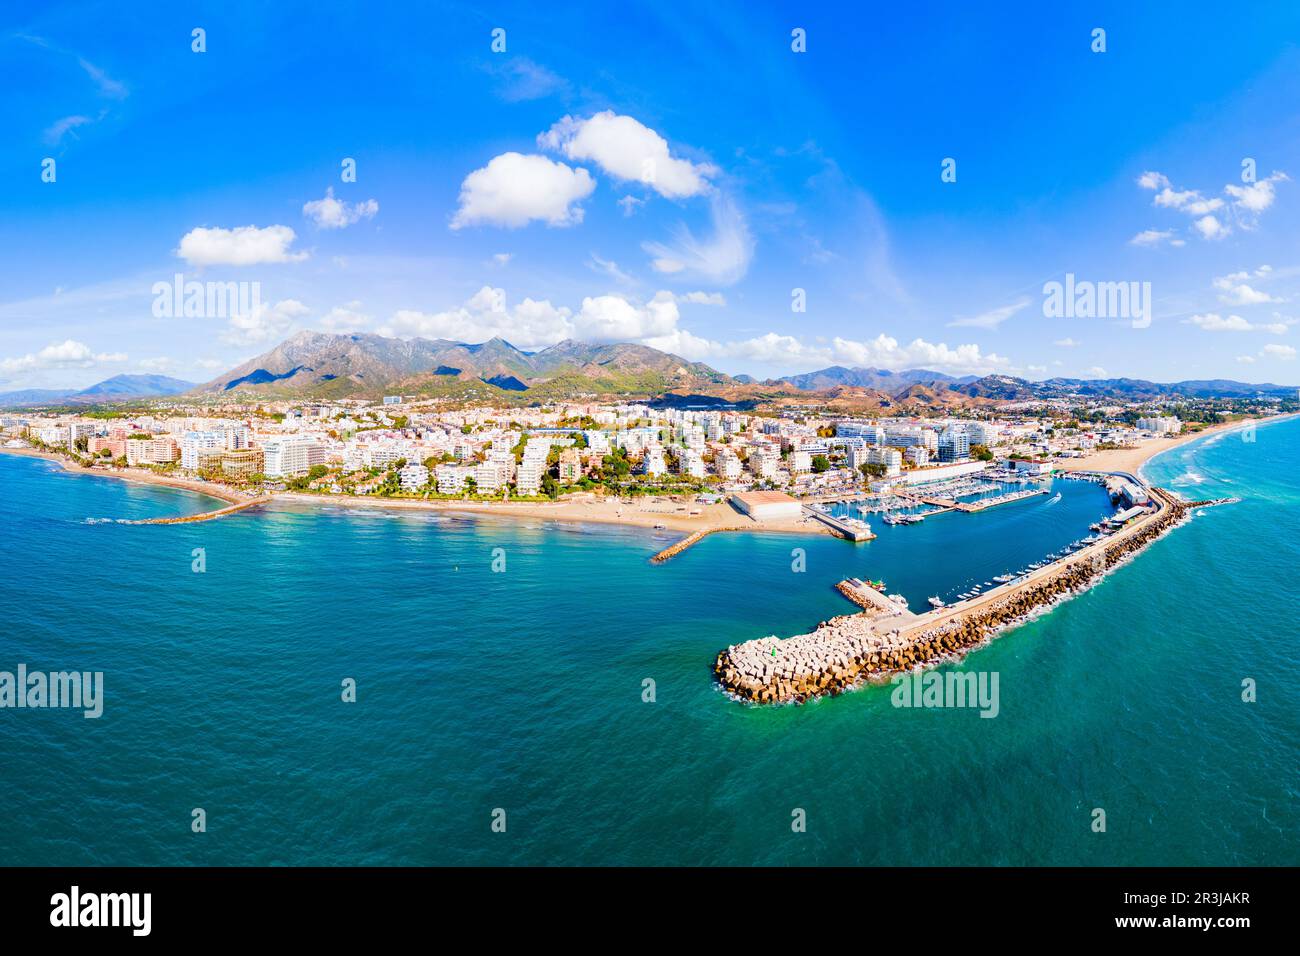 Vue panoramique aérienne de la marina de Marbella. Marbella est une ville de la province de Malaga en Andalousie, Espagne. Banque D'Images